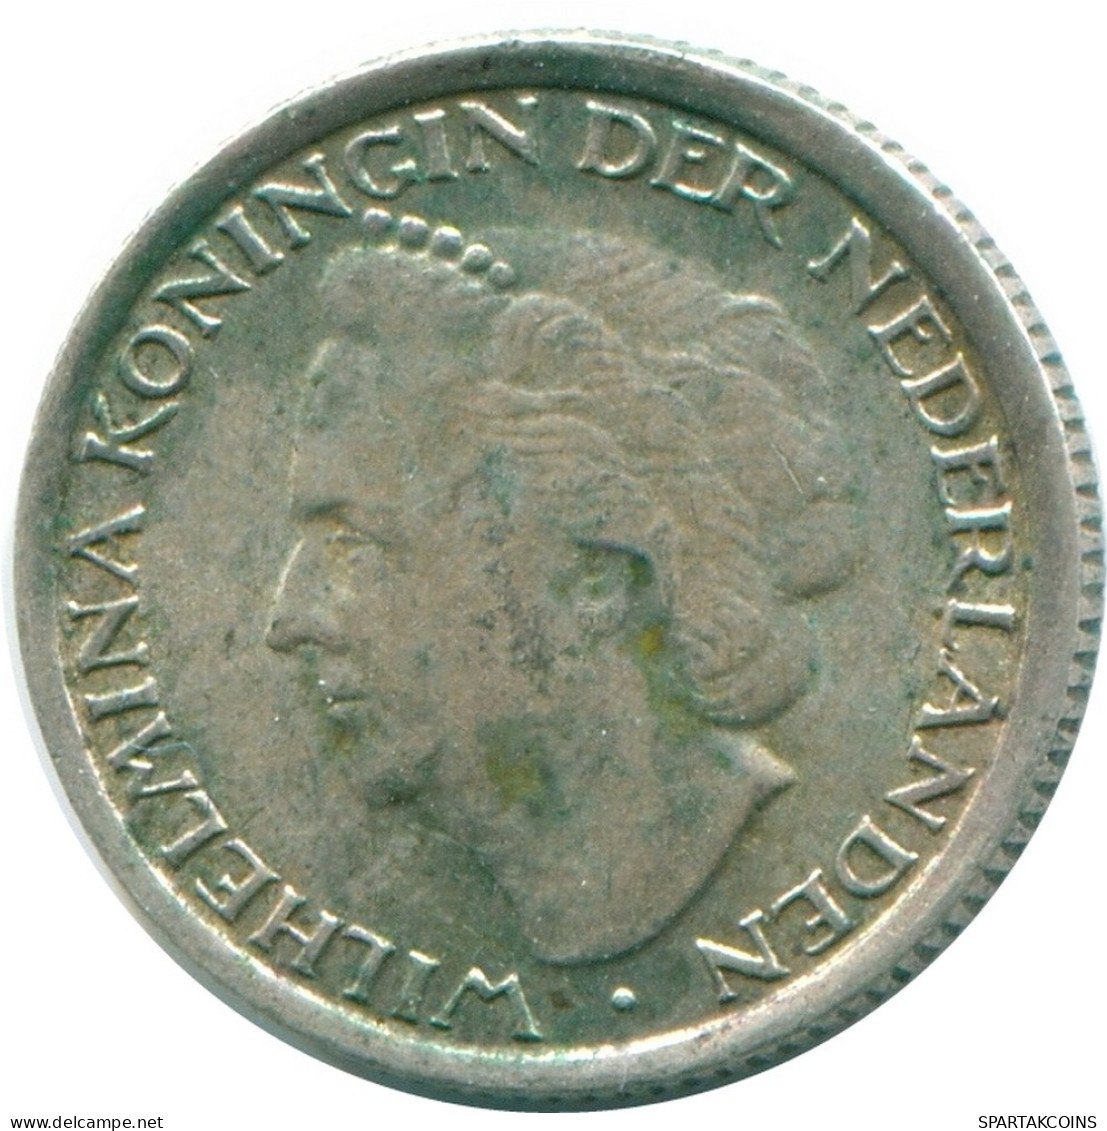 1/10 GULDEN 1948 CURACAO NIEDERLANDE SILBER Koloniale Münze #NL11893.3.D.A - Curaçao